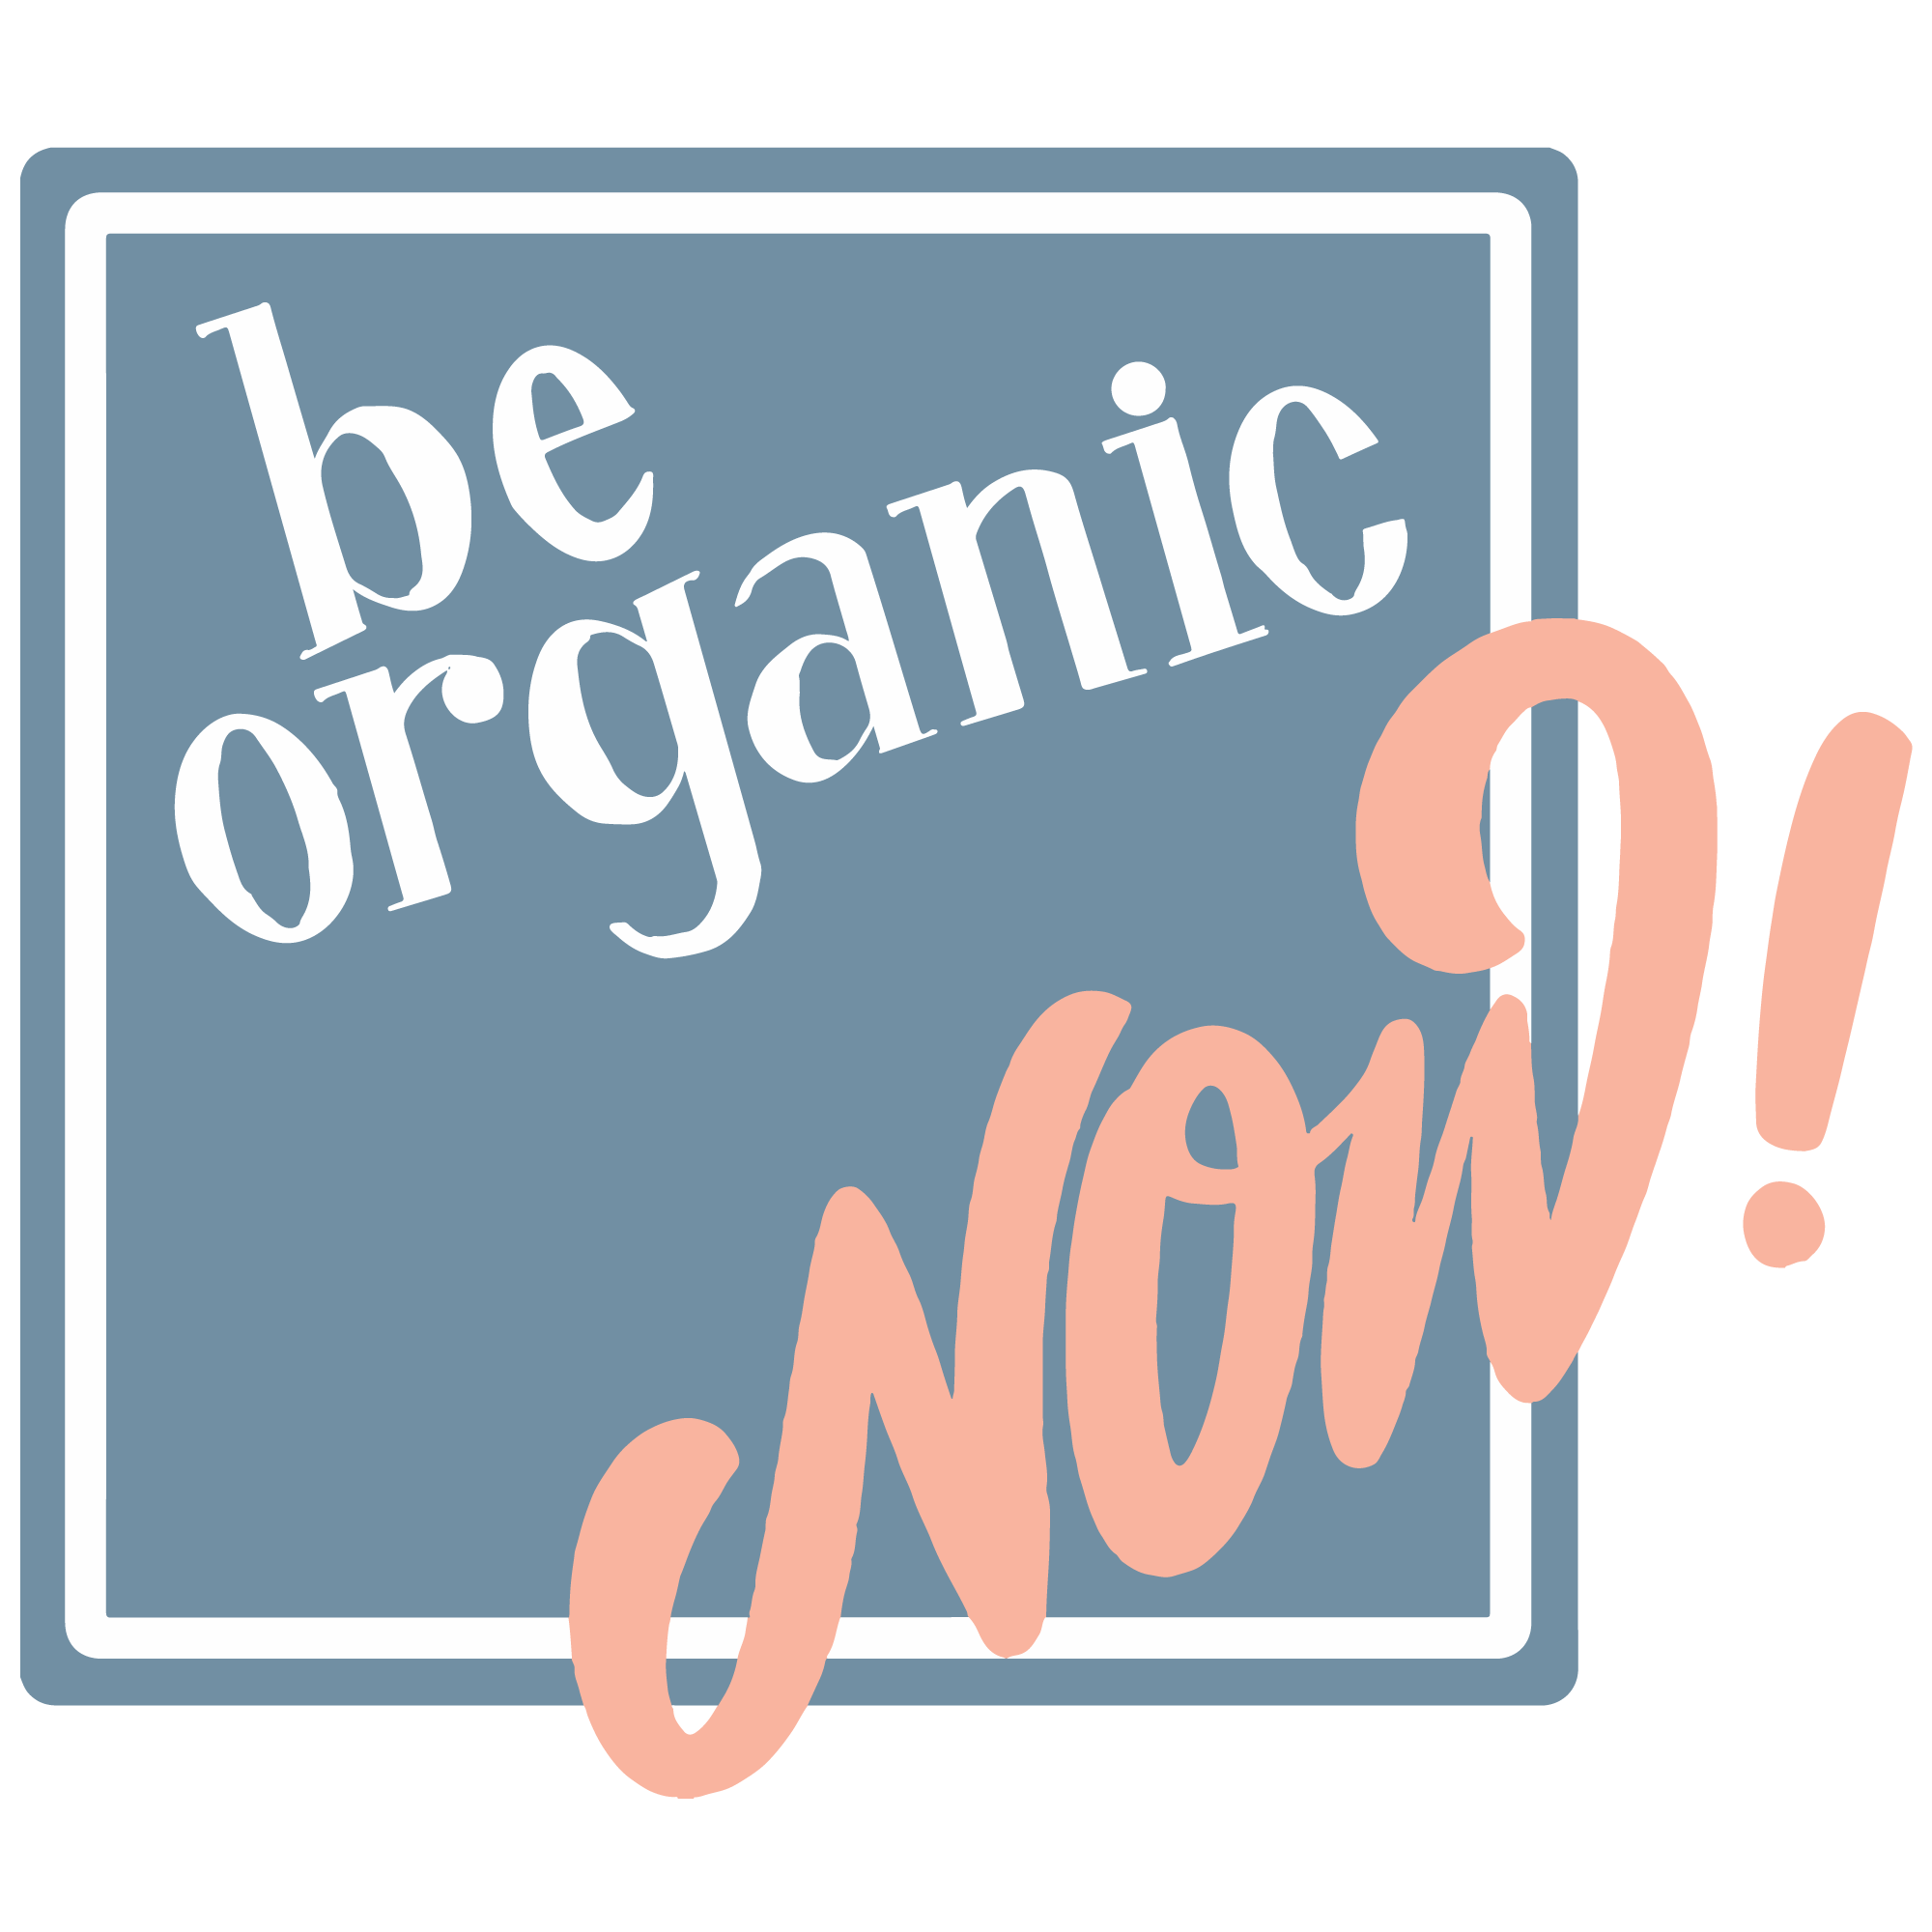 Be Organic Now